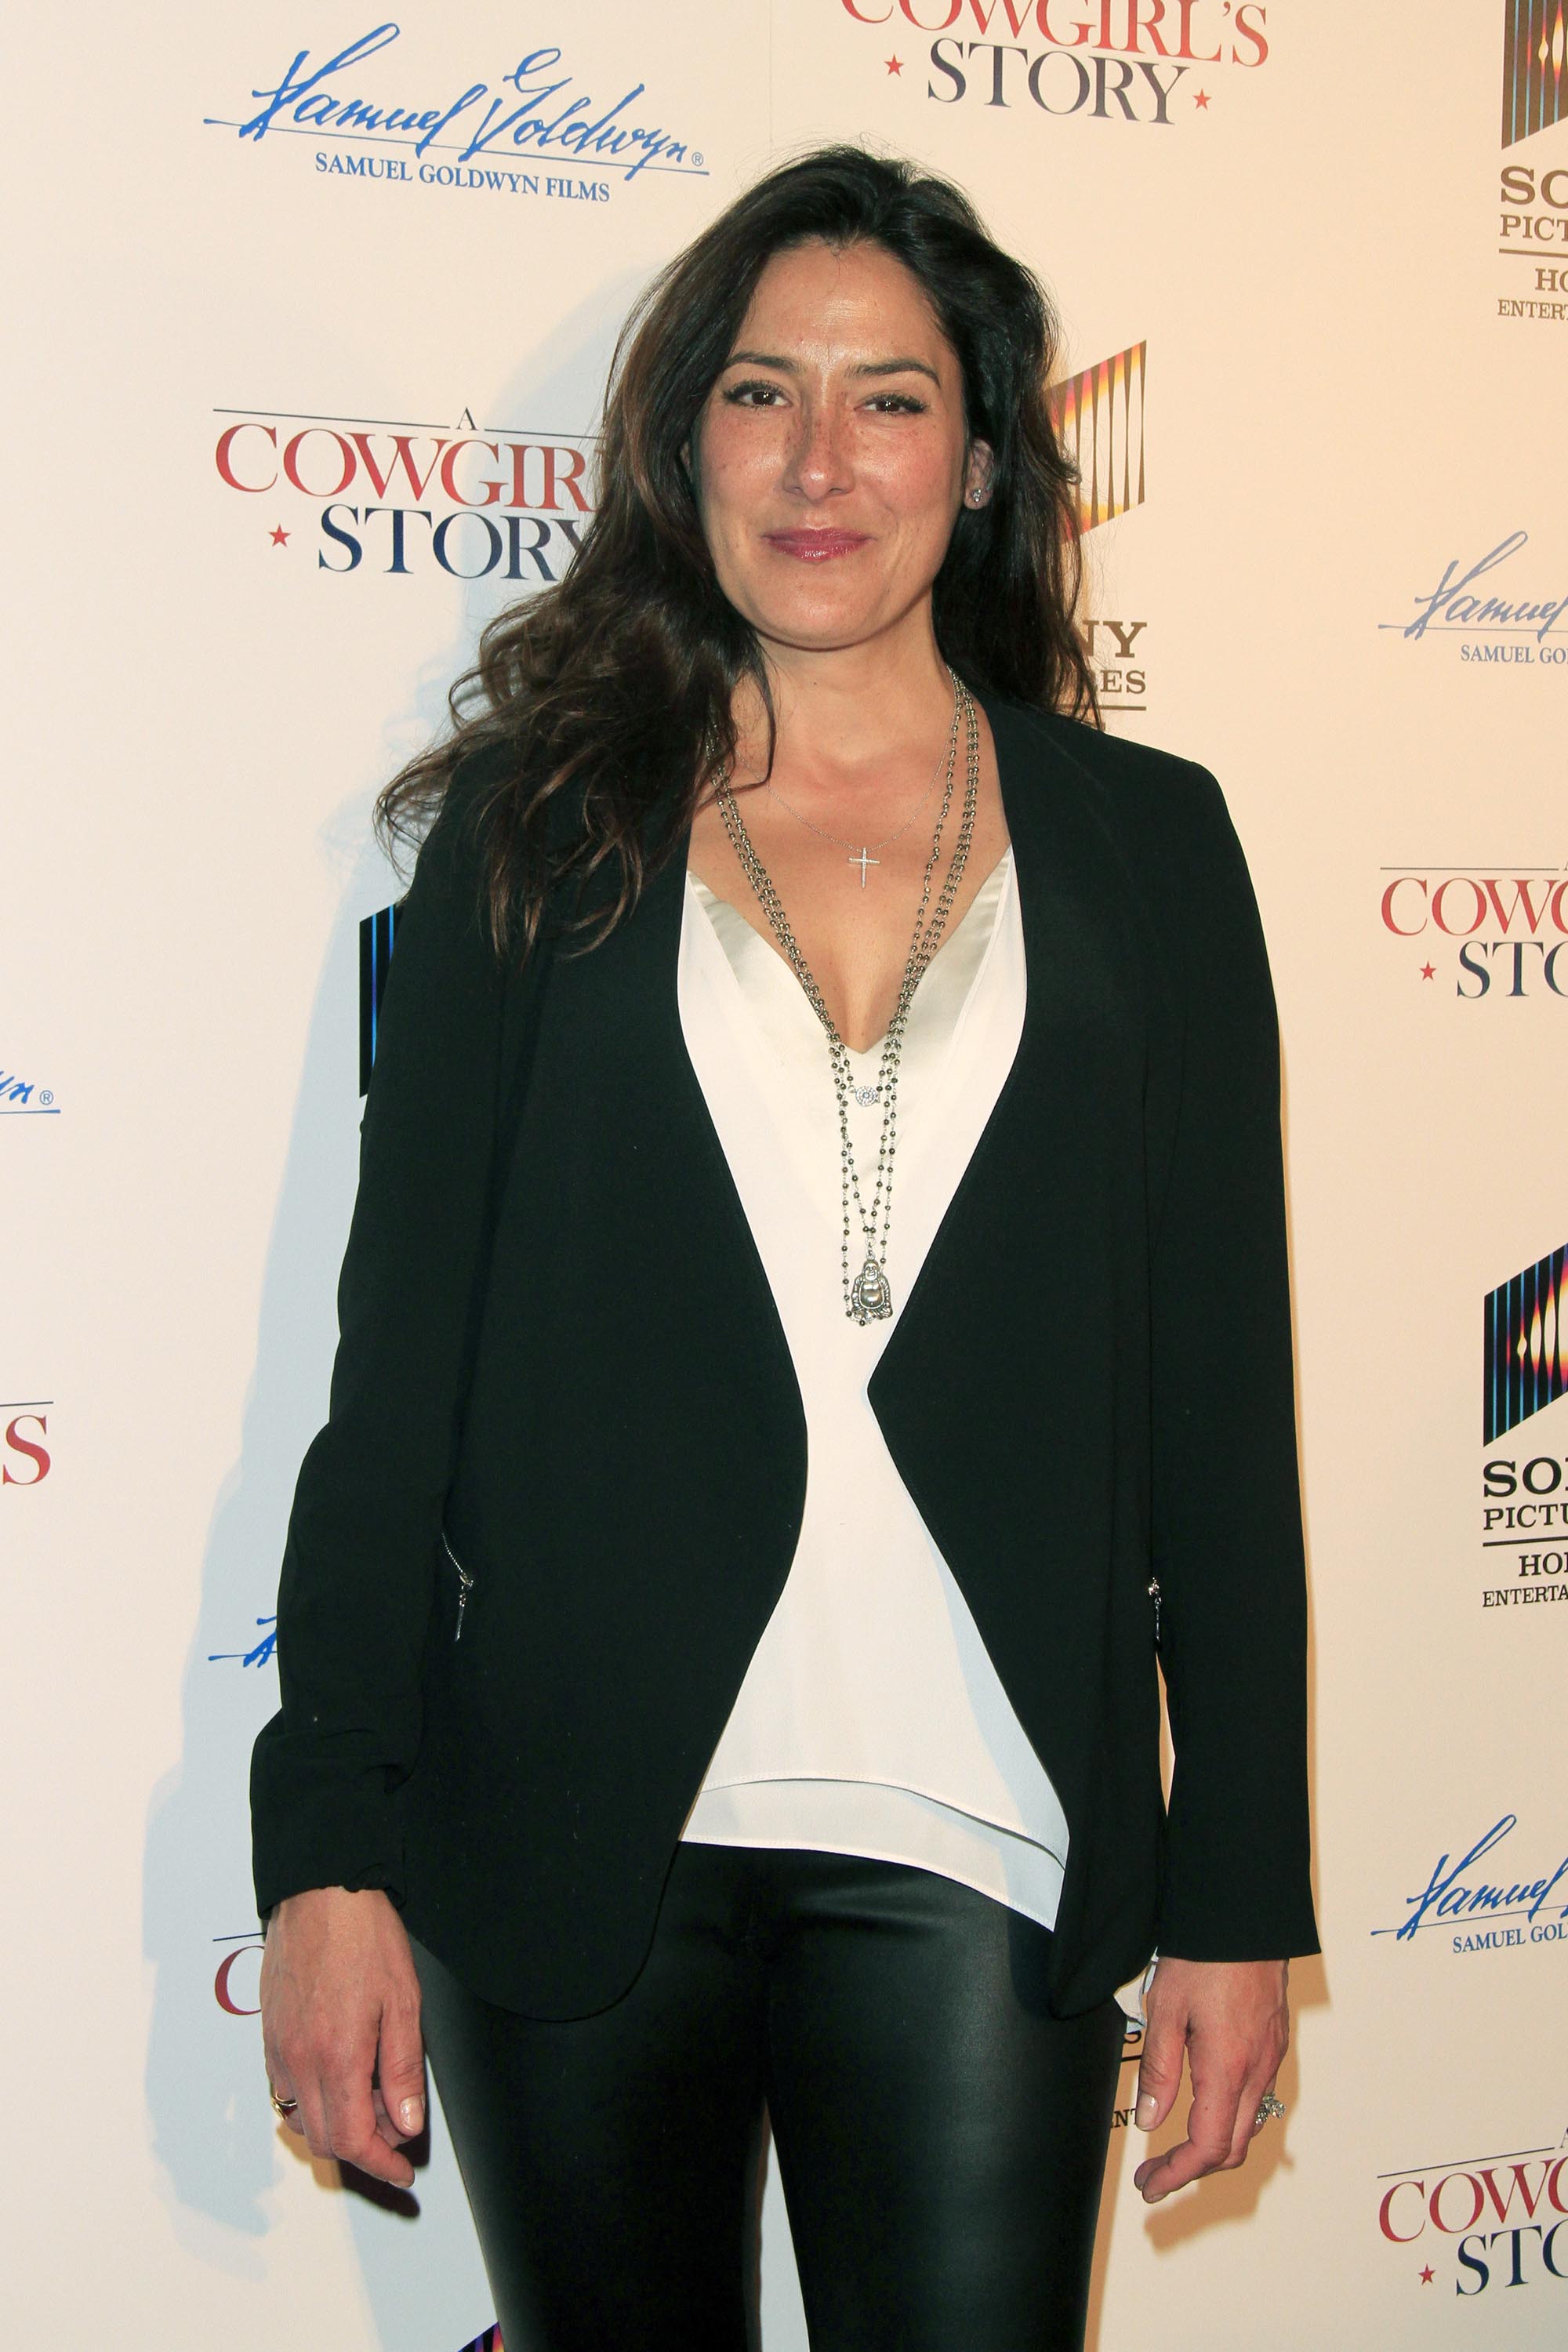 Alicia Coppola attends Premiere Of A Cowgirl’s Story